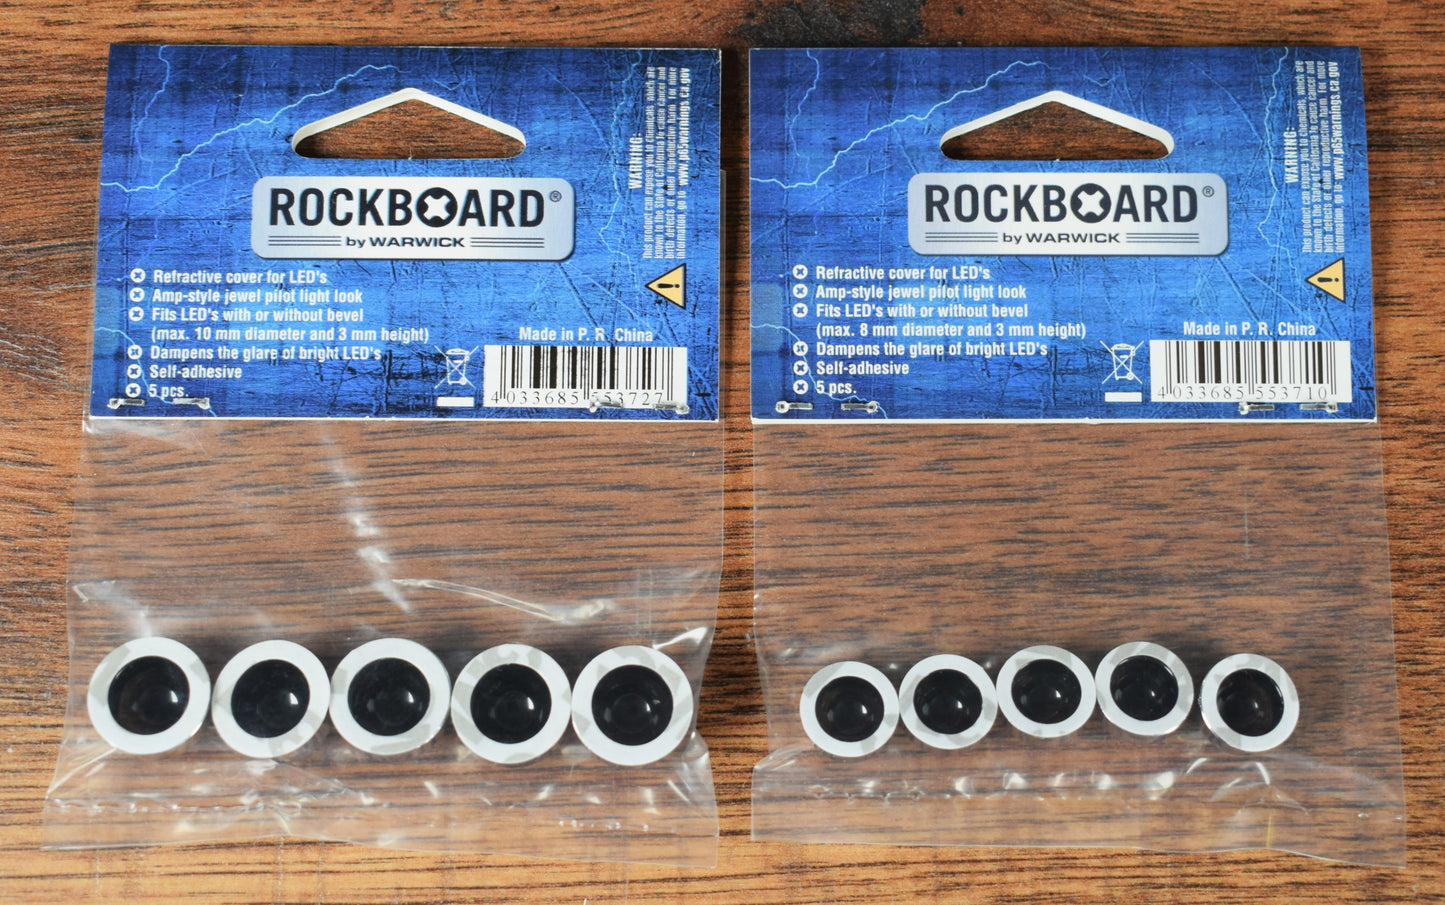 Warwick Rockboard Guitar Effect Pedal LED Damper Jewel Small 8mm & Large 10.50mm Set of 10